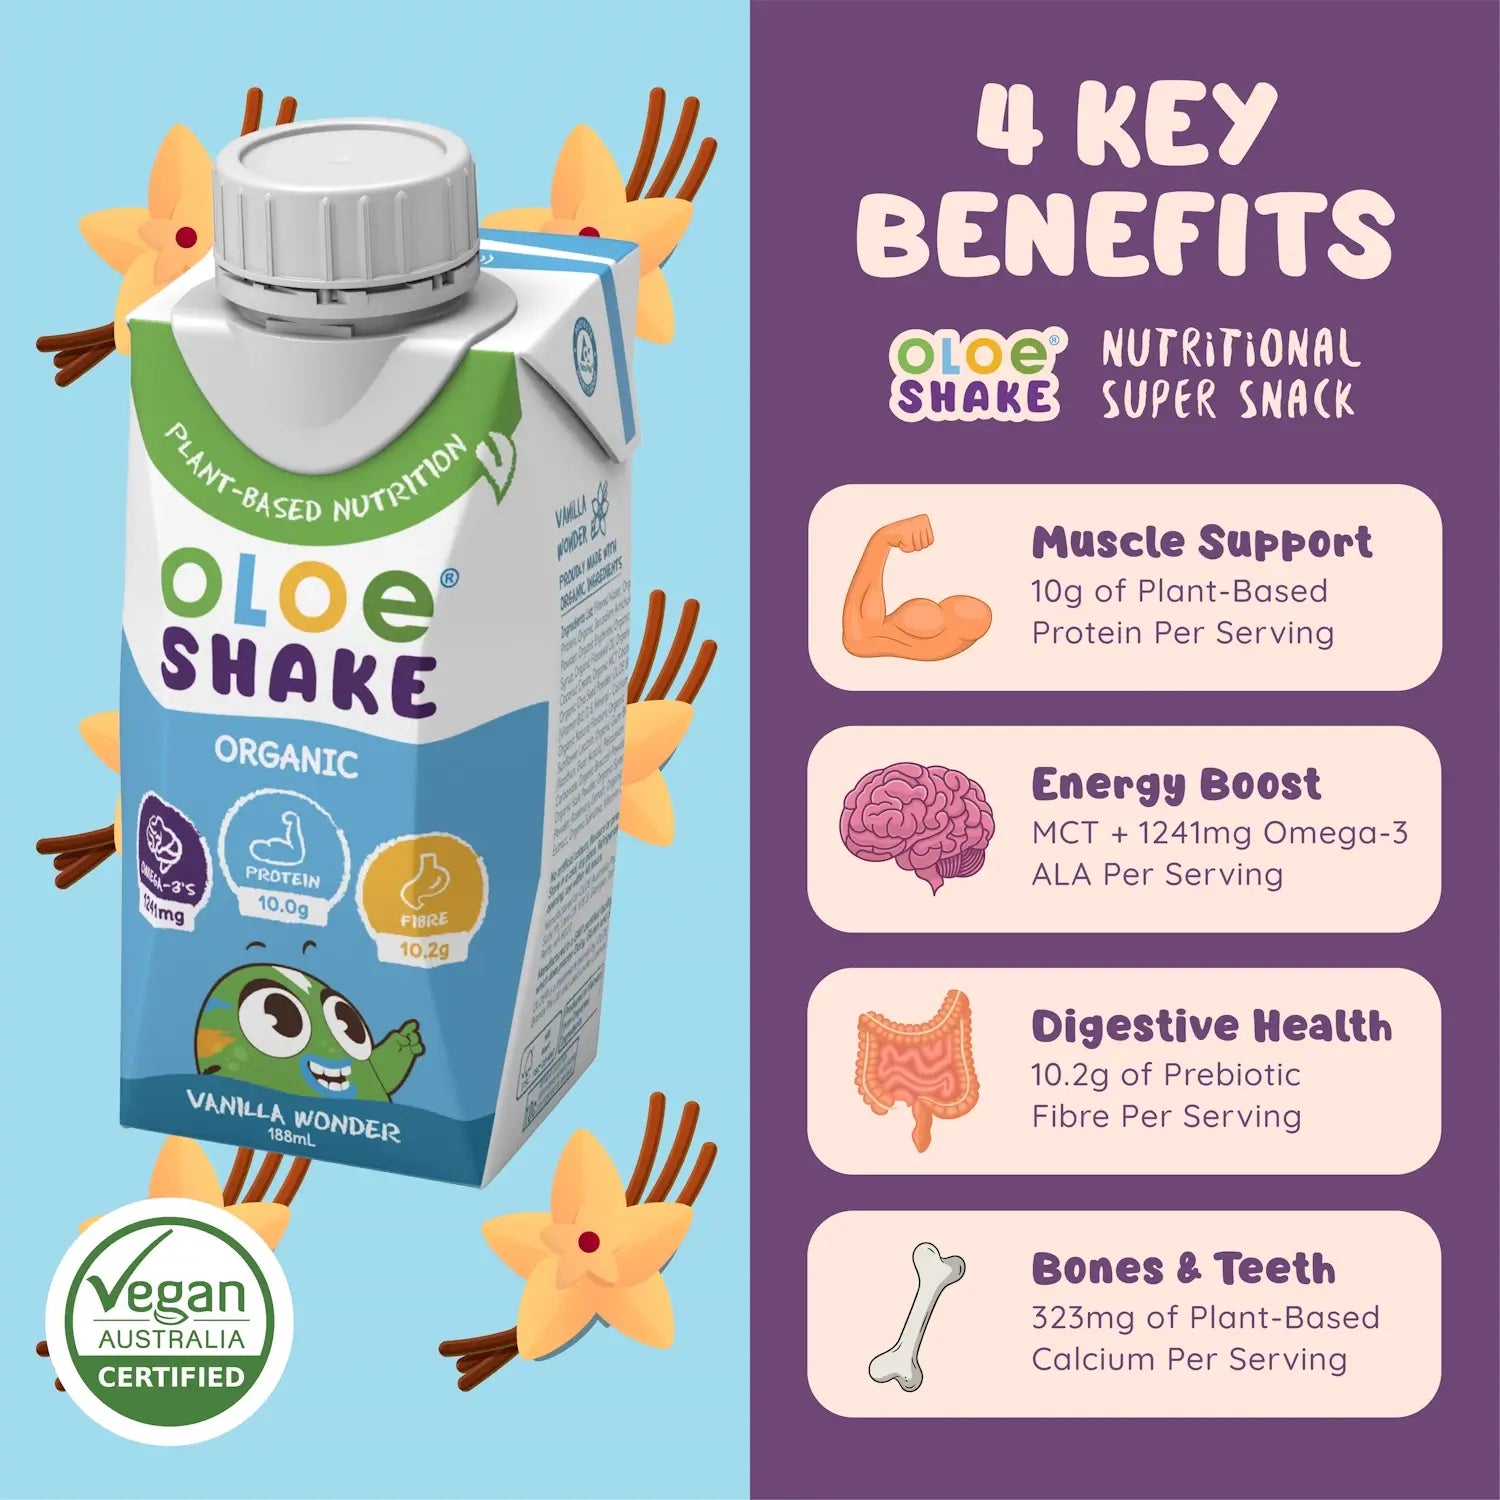 oloe-shake-vanilla-wonder-ecommerce-4-key-benefits